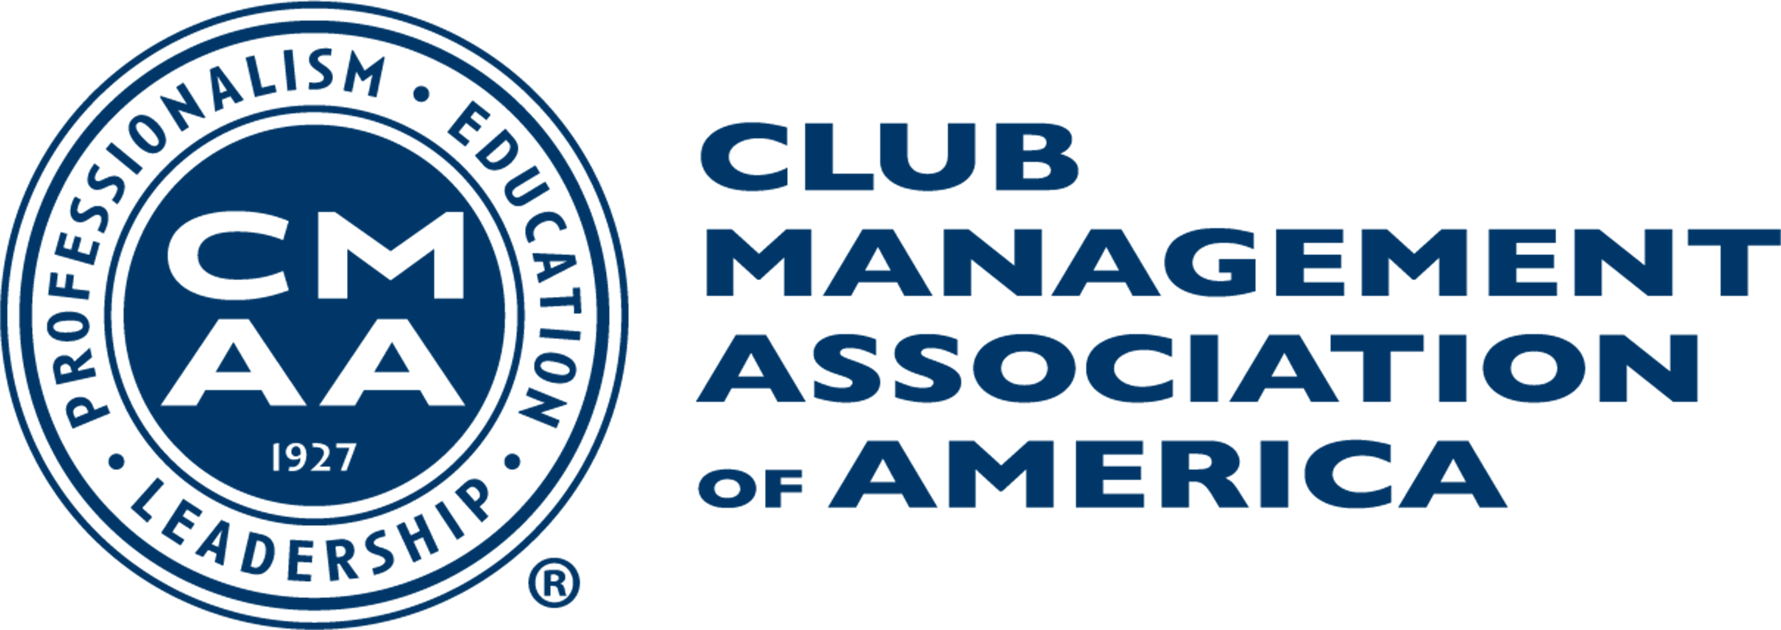 Club Management Association of America: CMAA